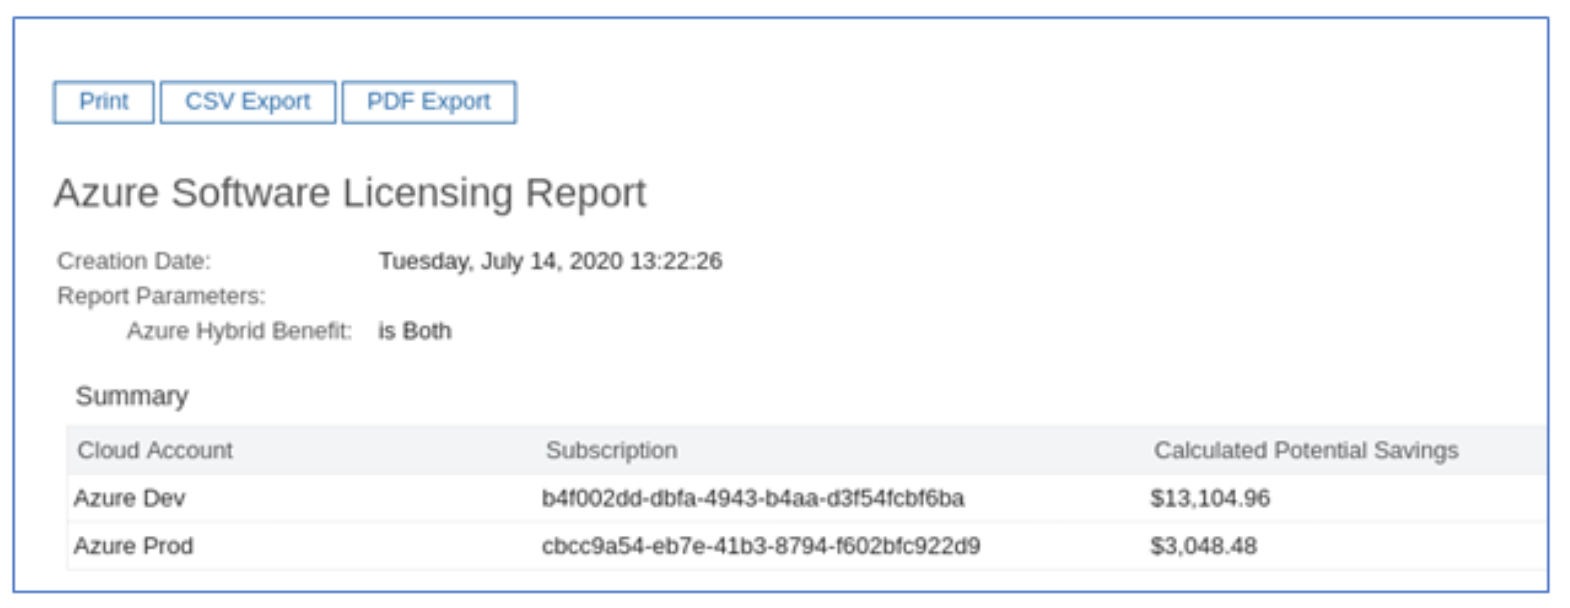 Azure Software Licensing Report